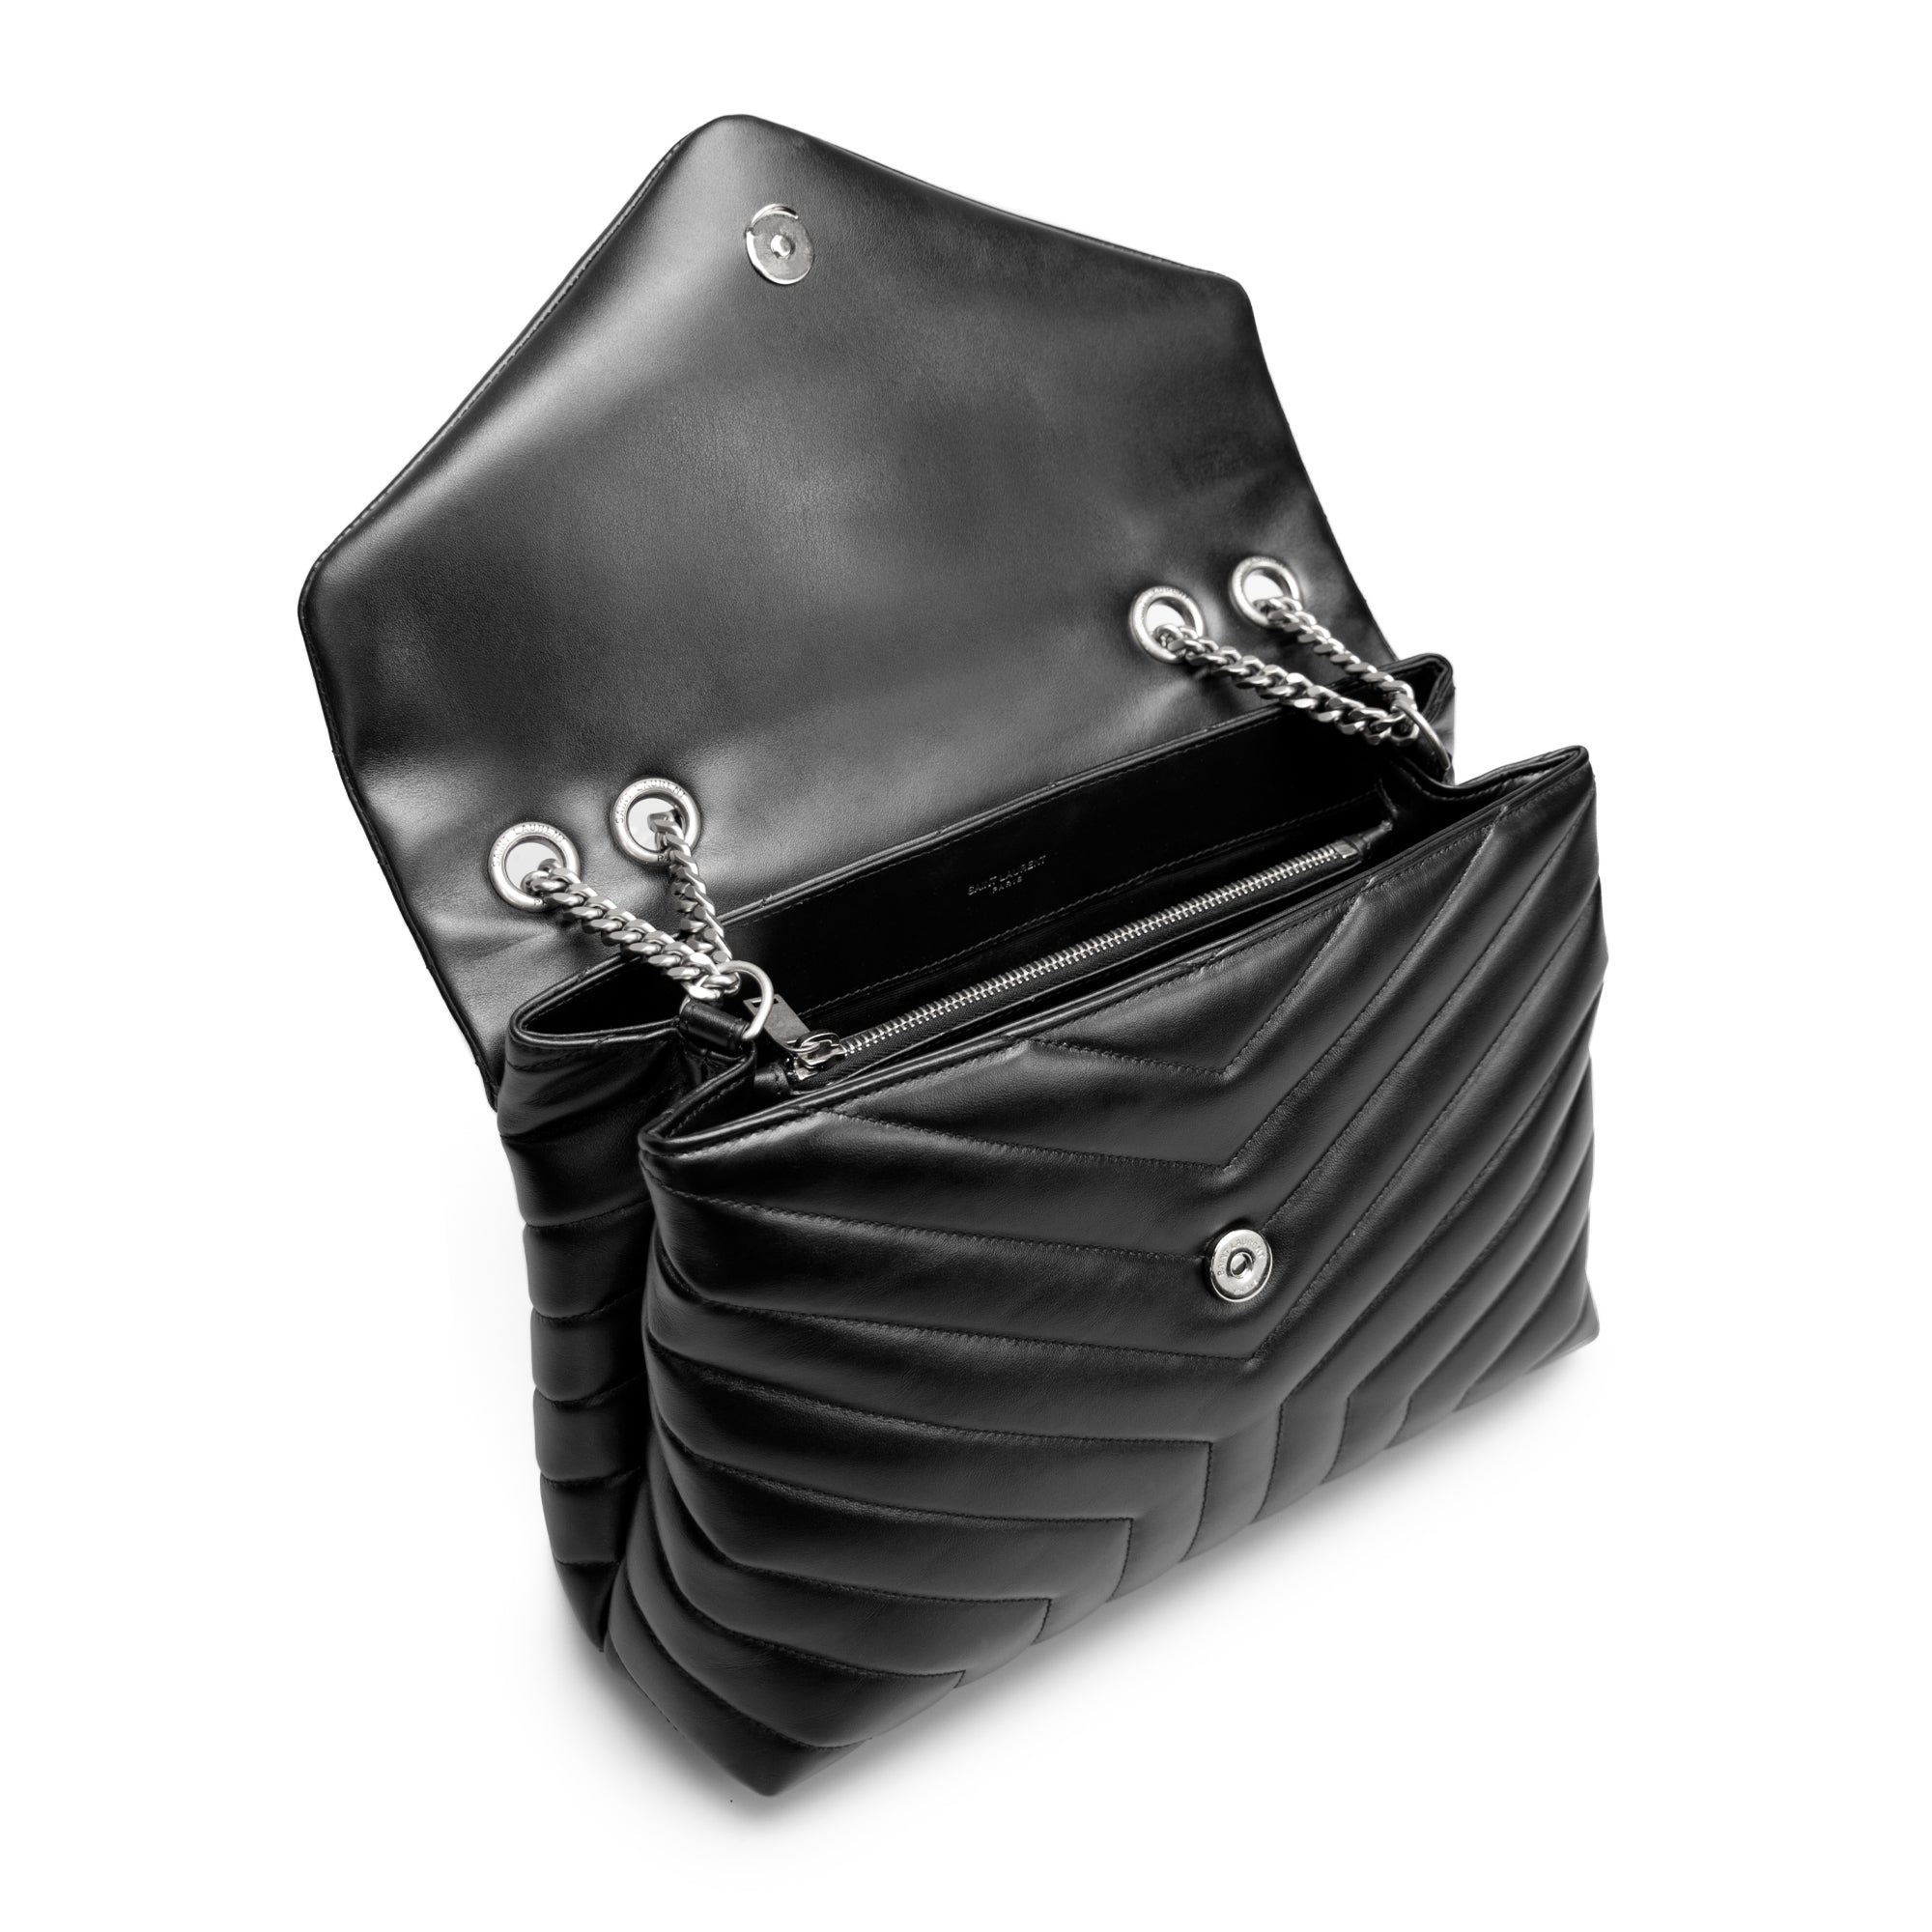 Saint Laurent Loulou Medium Shoulder Bag in Quilted Leather